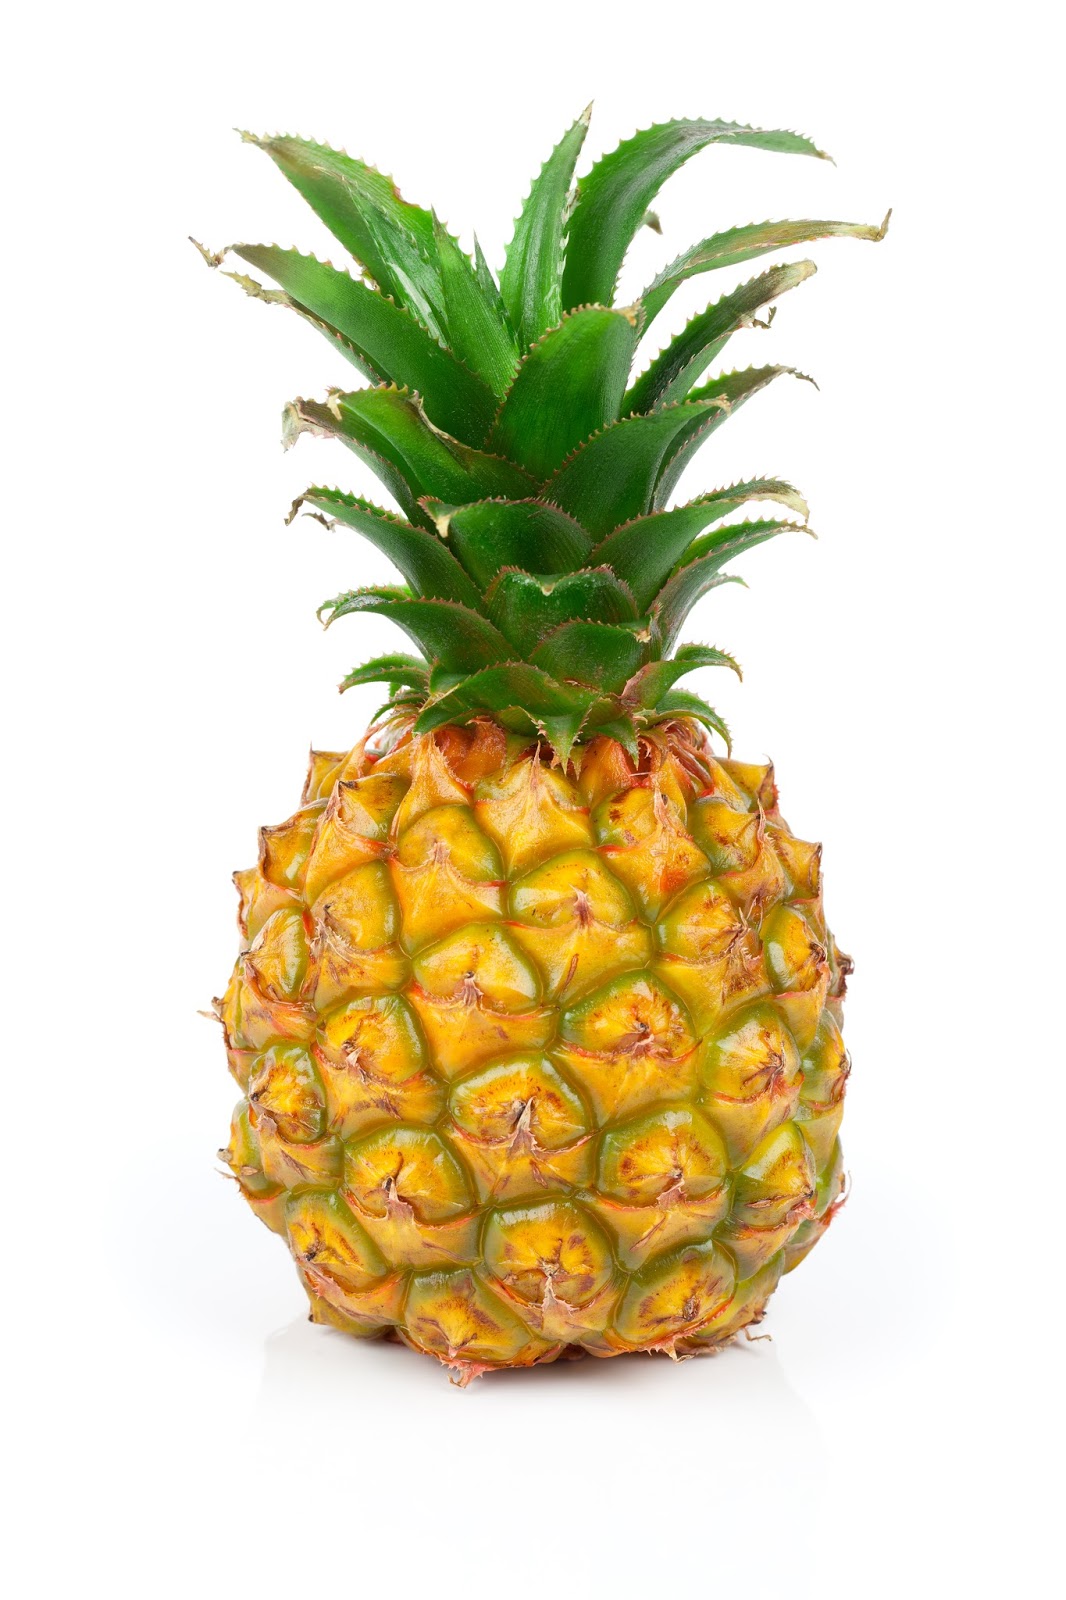 download pineapple painkiller